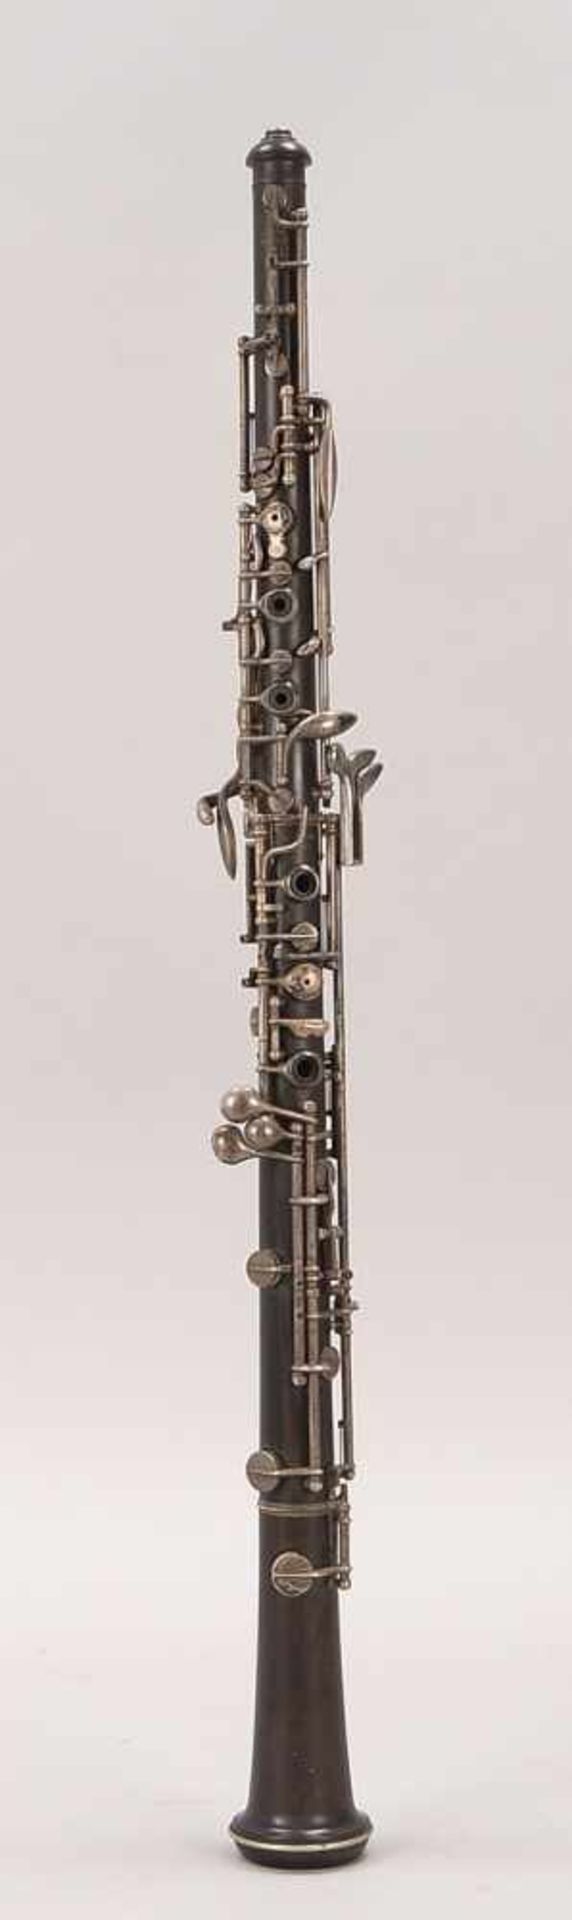 Oboe in b#, 'Cabart', F. Lorée/Paris (ca. 1890), Grenadillholz, mit 17x Klappen und 4x Ringen/